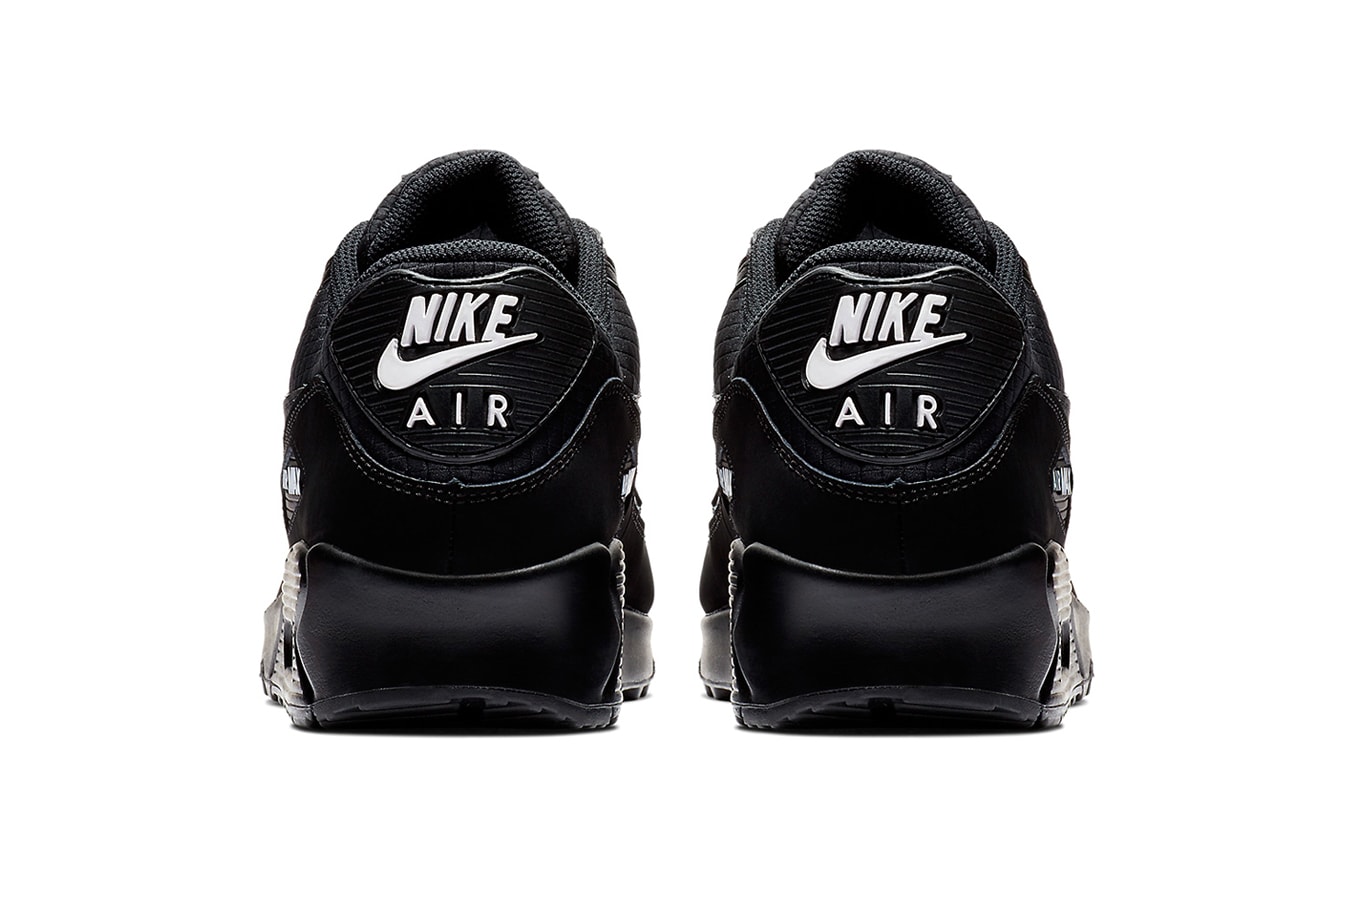 Nike Air Max 90 Essential Black & White Release nike swoosh air unit midsole